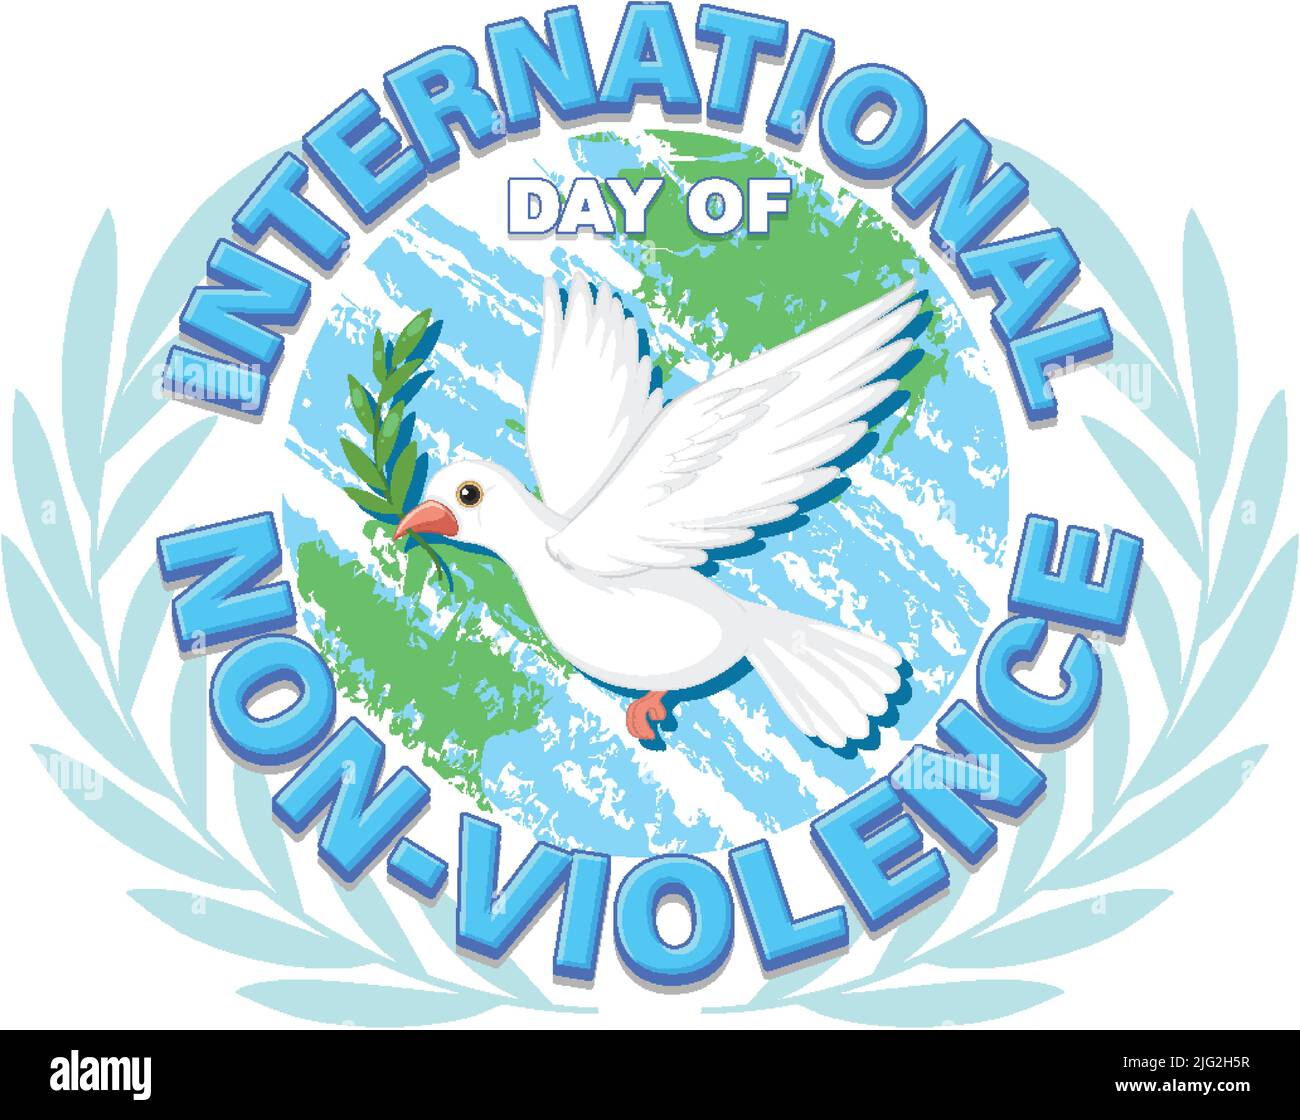 Internationaler Tag der Gewaltlosigkeit Poster Design Illustration Stock Vektor